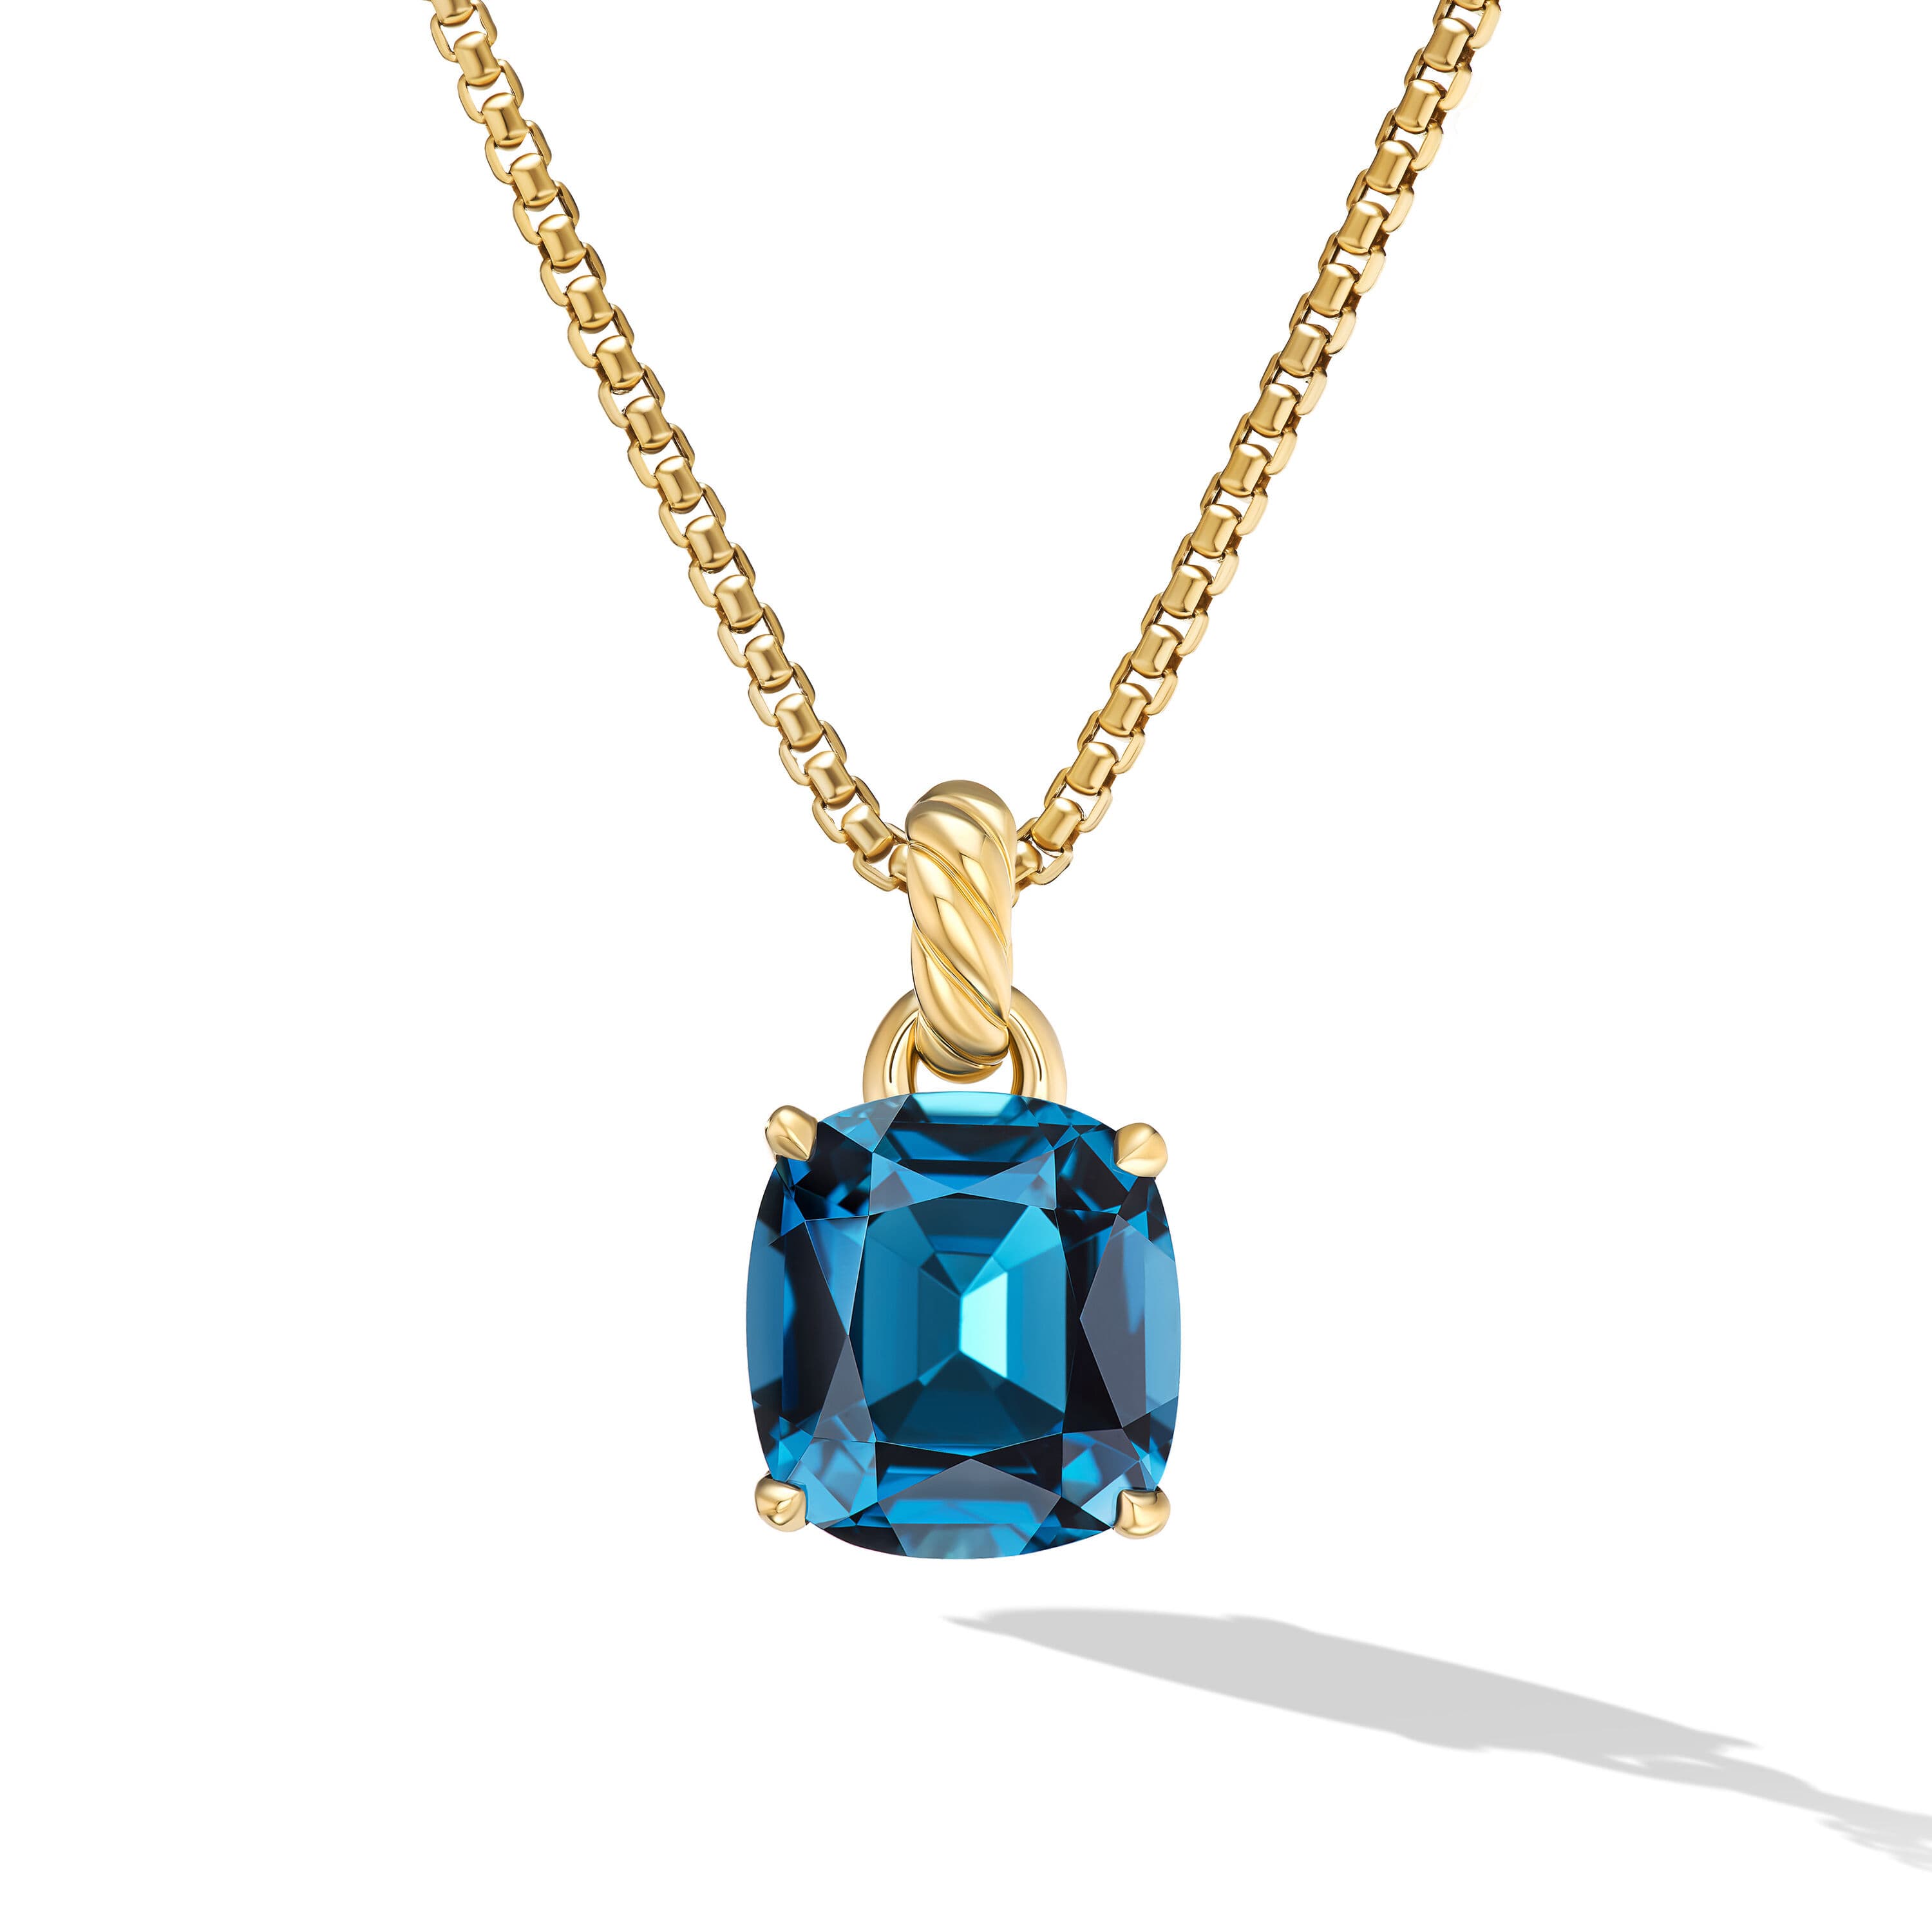 David Yurman Marbella Pendant in Gold with Hampton Blue Topaz